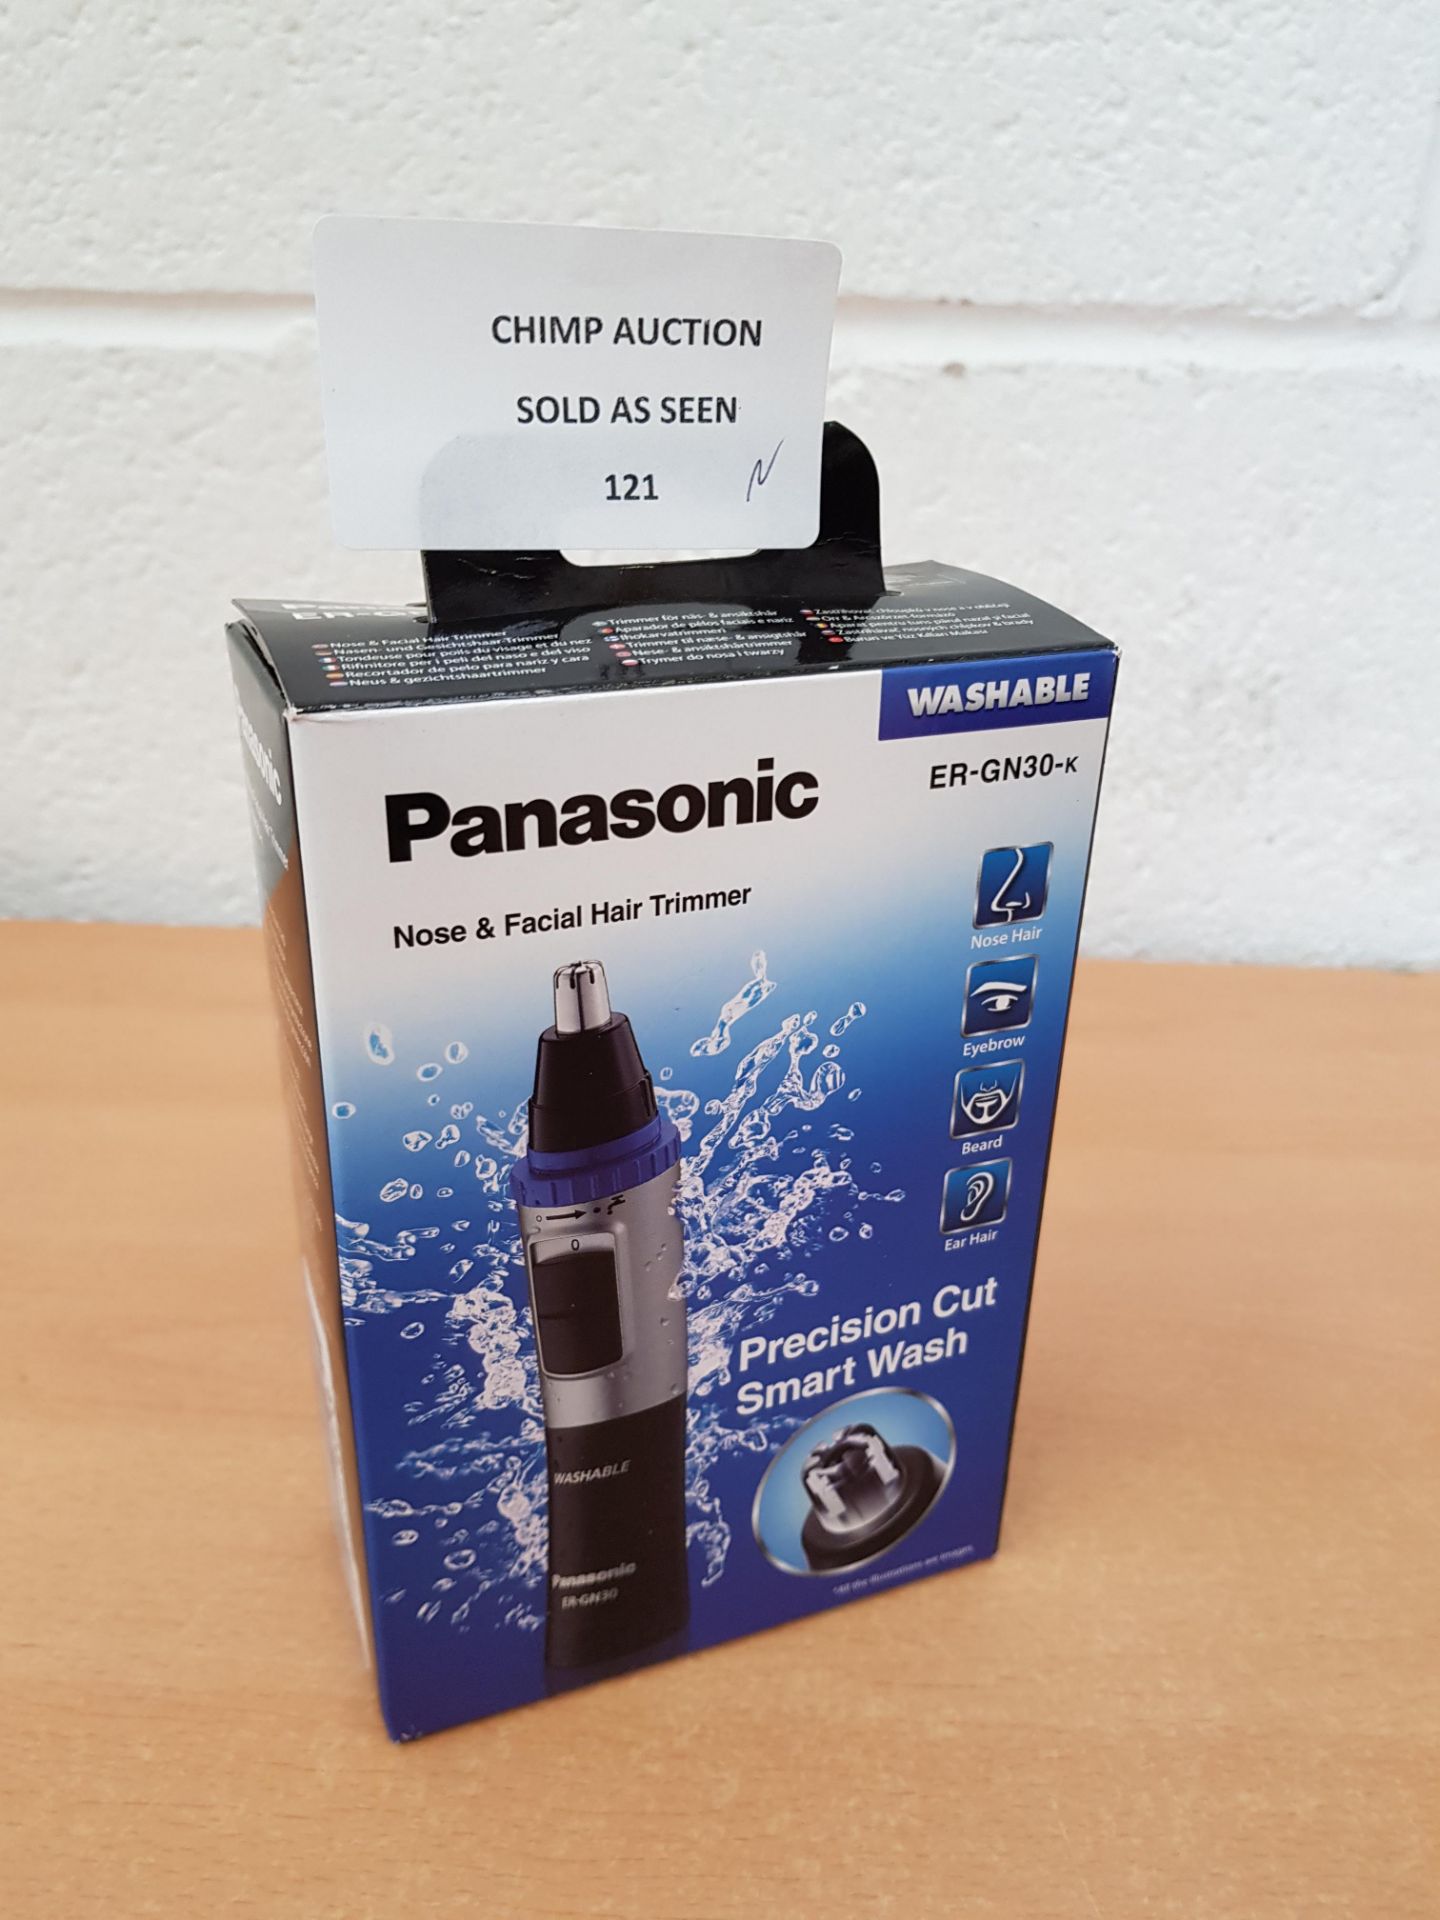 Brand new Panasonic ER-GN30-K Nose & Facial Hair trimmer